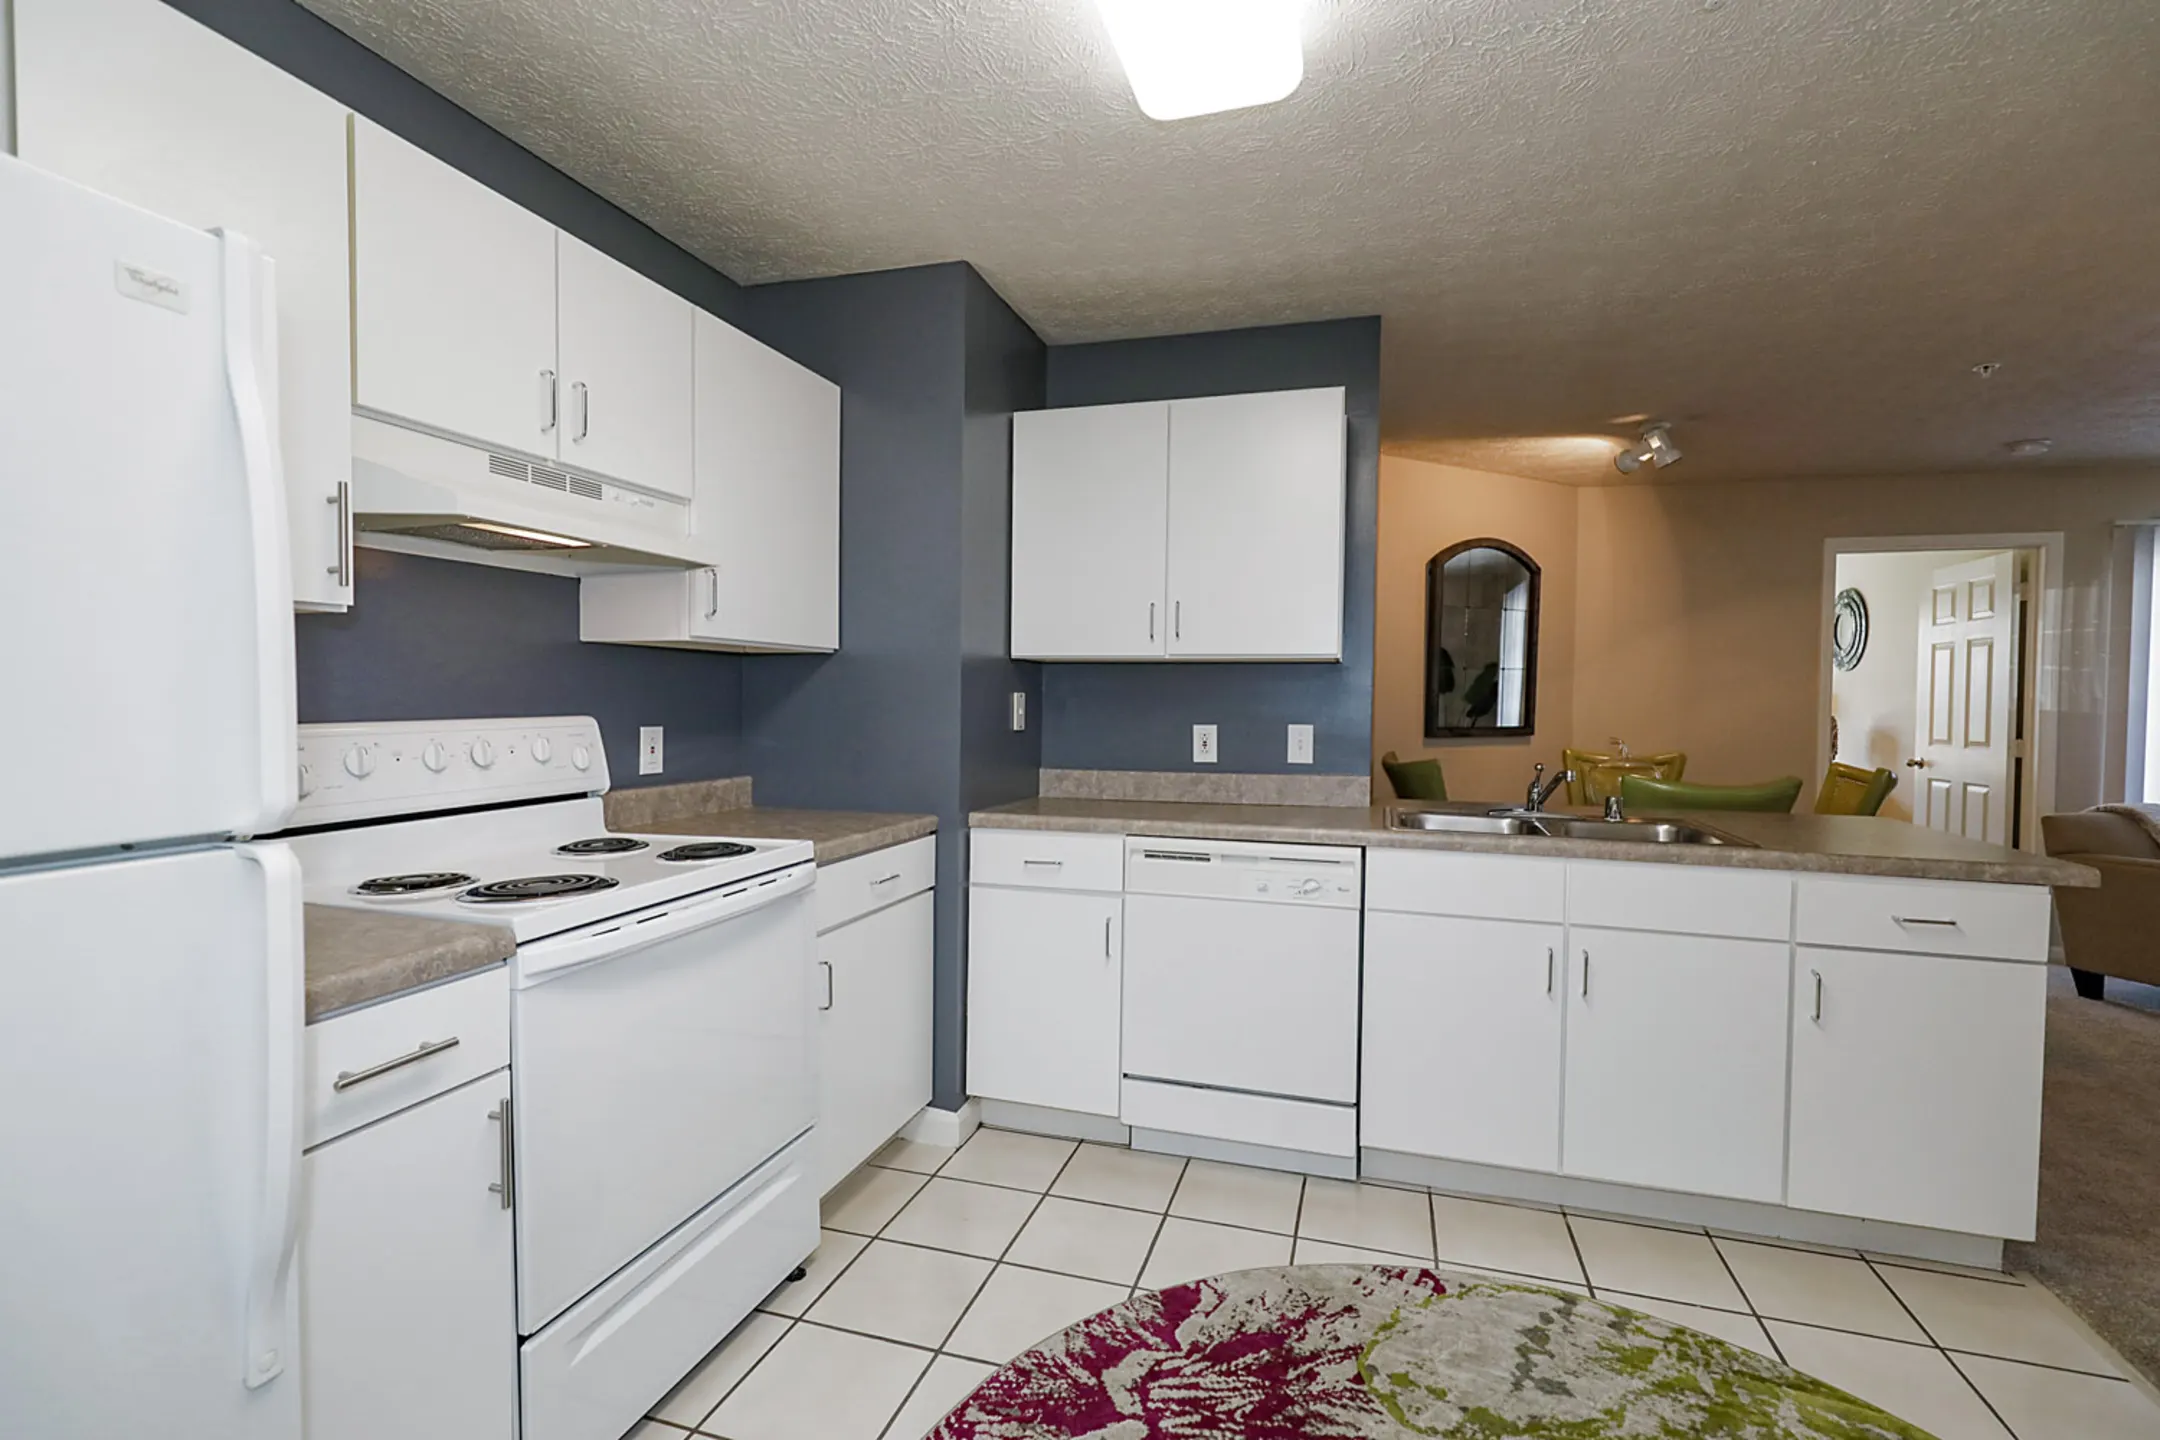 Kitchen - Bridle Creek Apartments - Lexington, KY